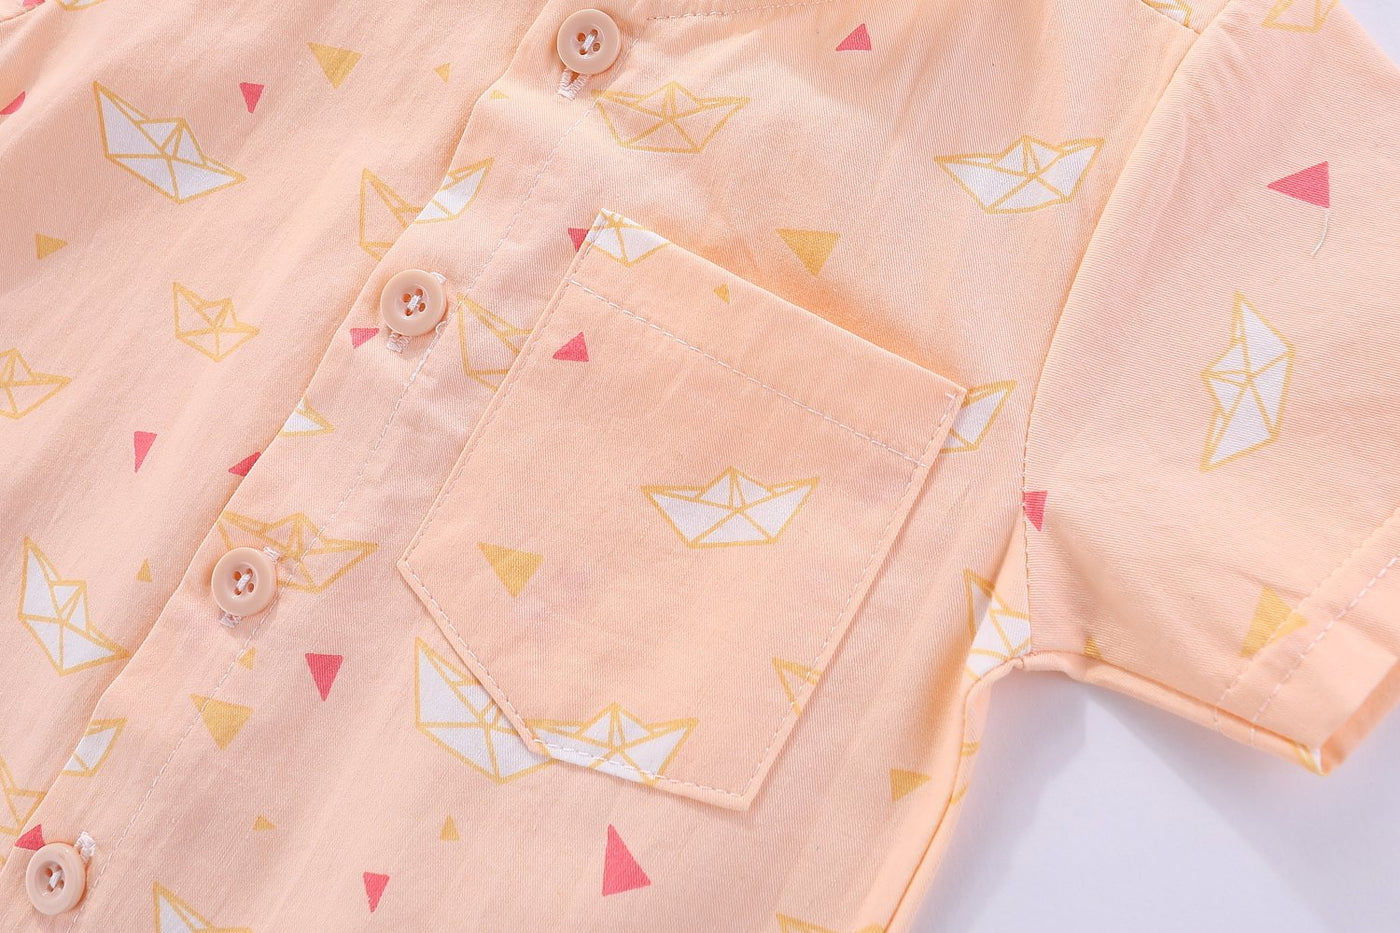 Paper Boat Mandarin Collar Shirt